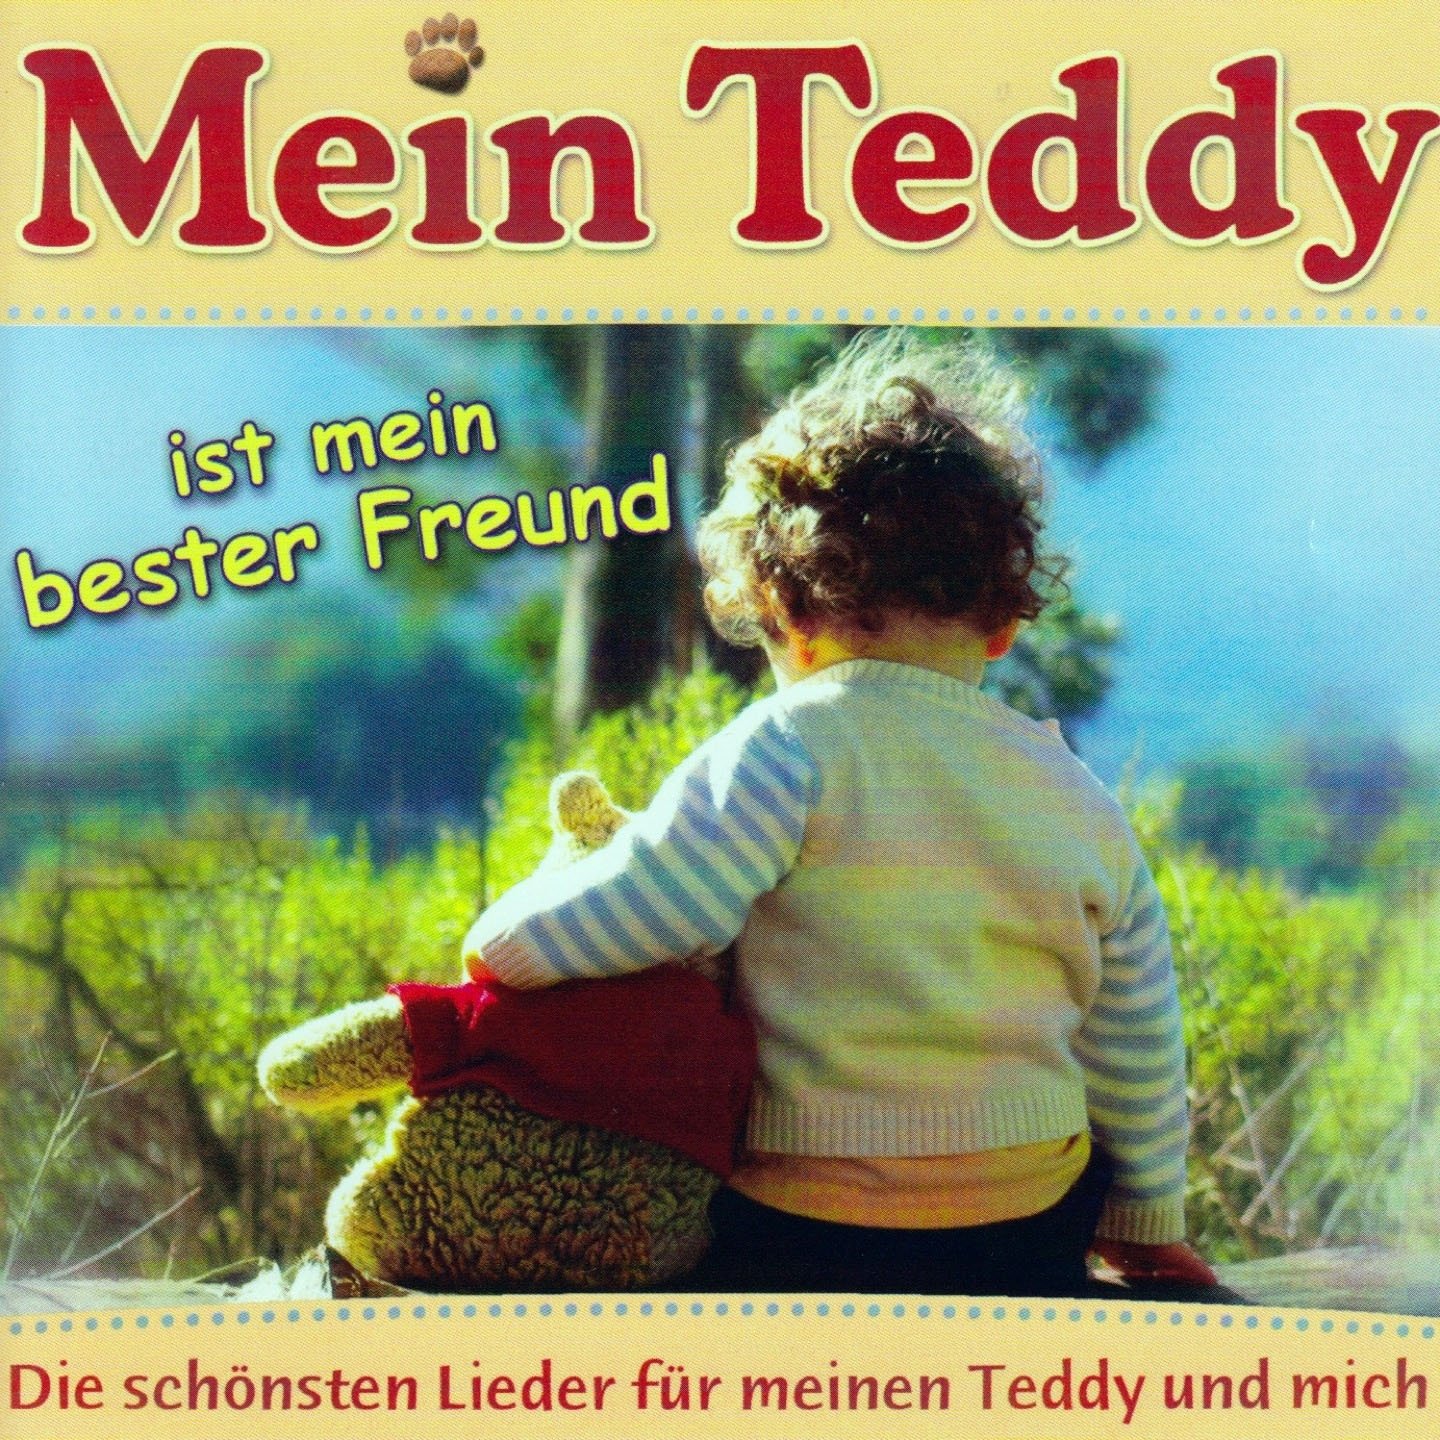 Mein Teddy описание по немецкий.